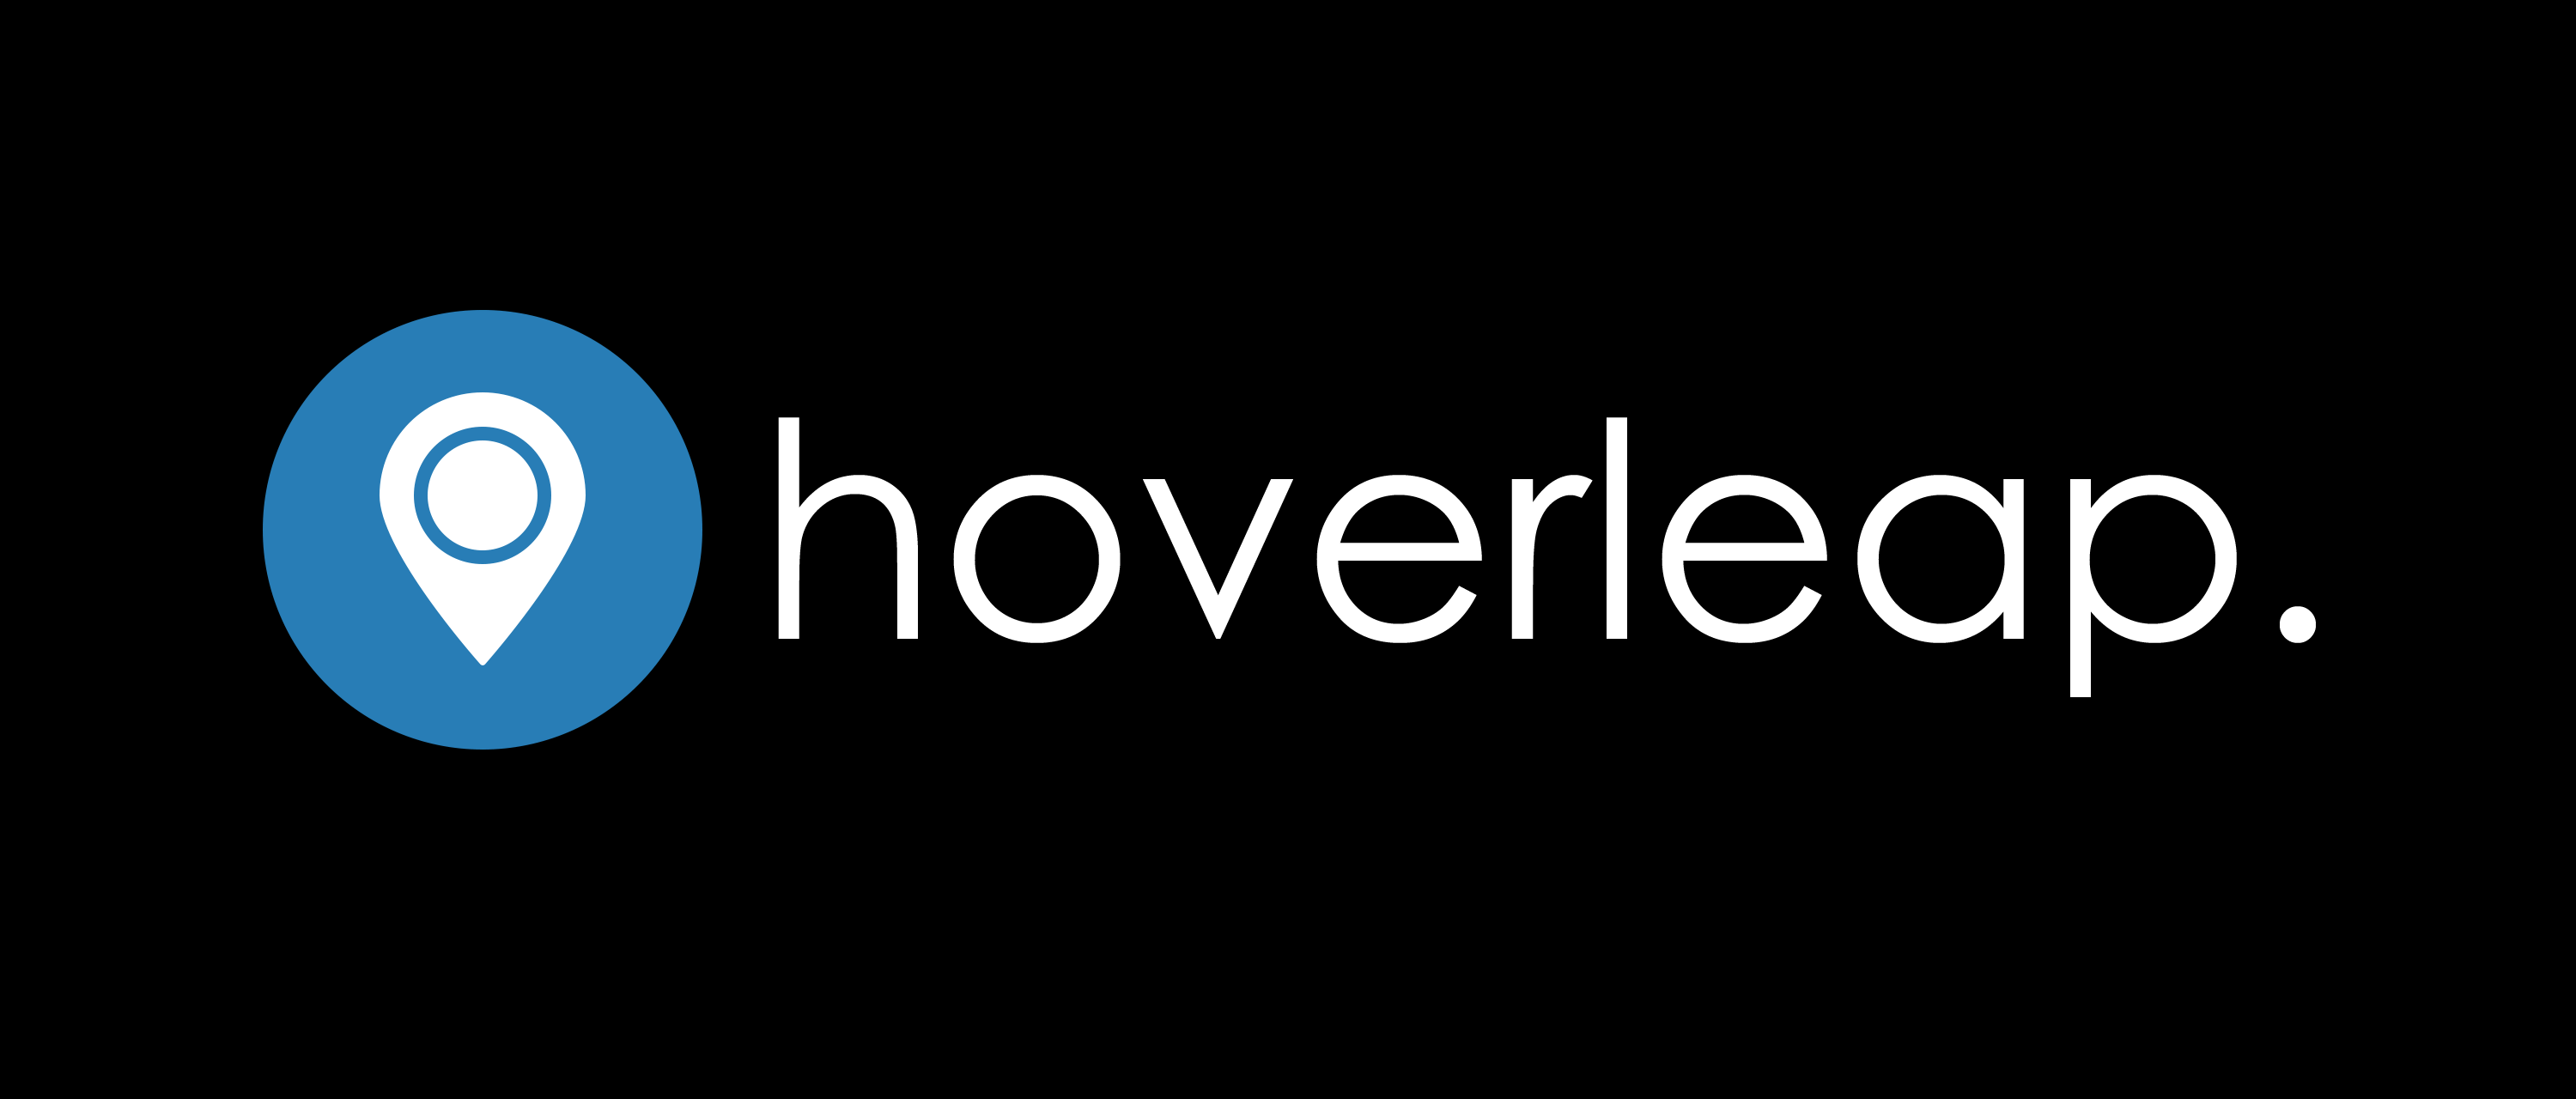 Hoverleap logo